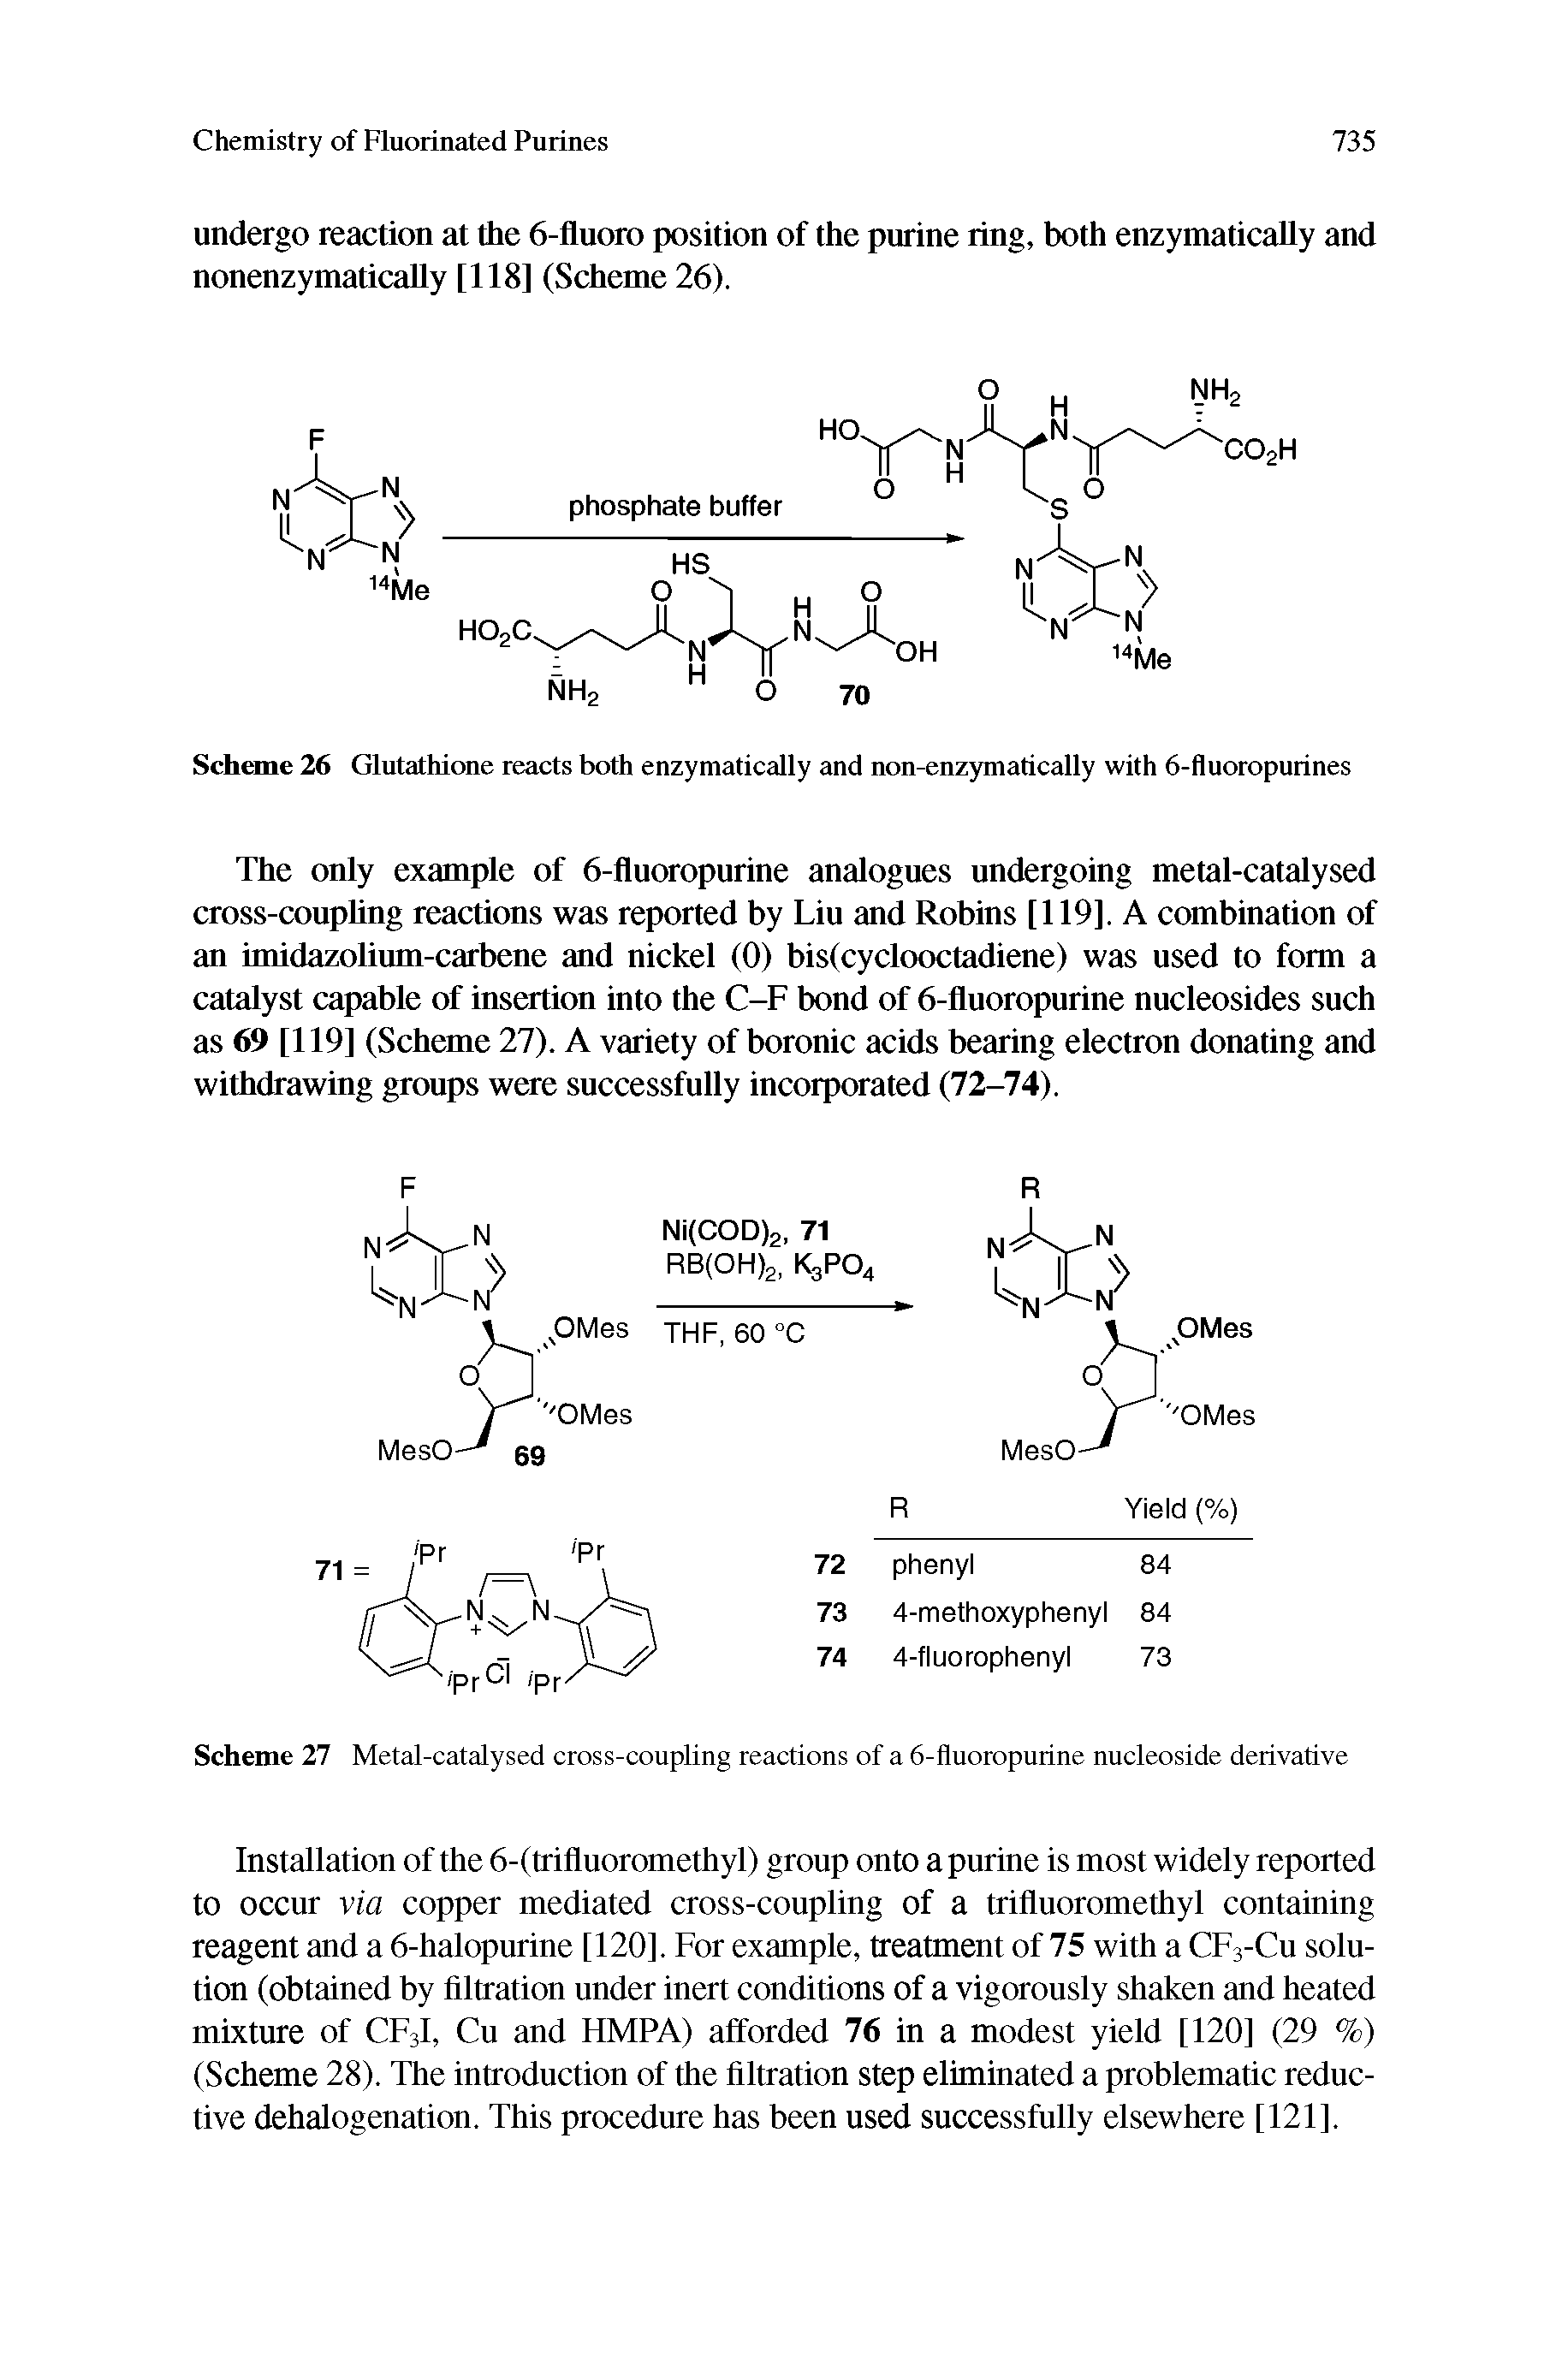 Scheme 27 Metal-catalysed cross-coupling reactions of a 6-fluoropurine nucleoside derivative...